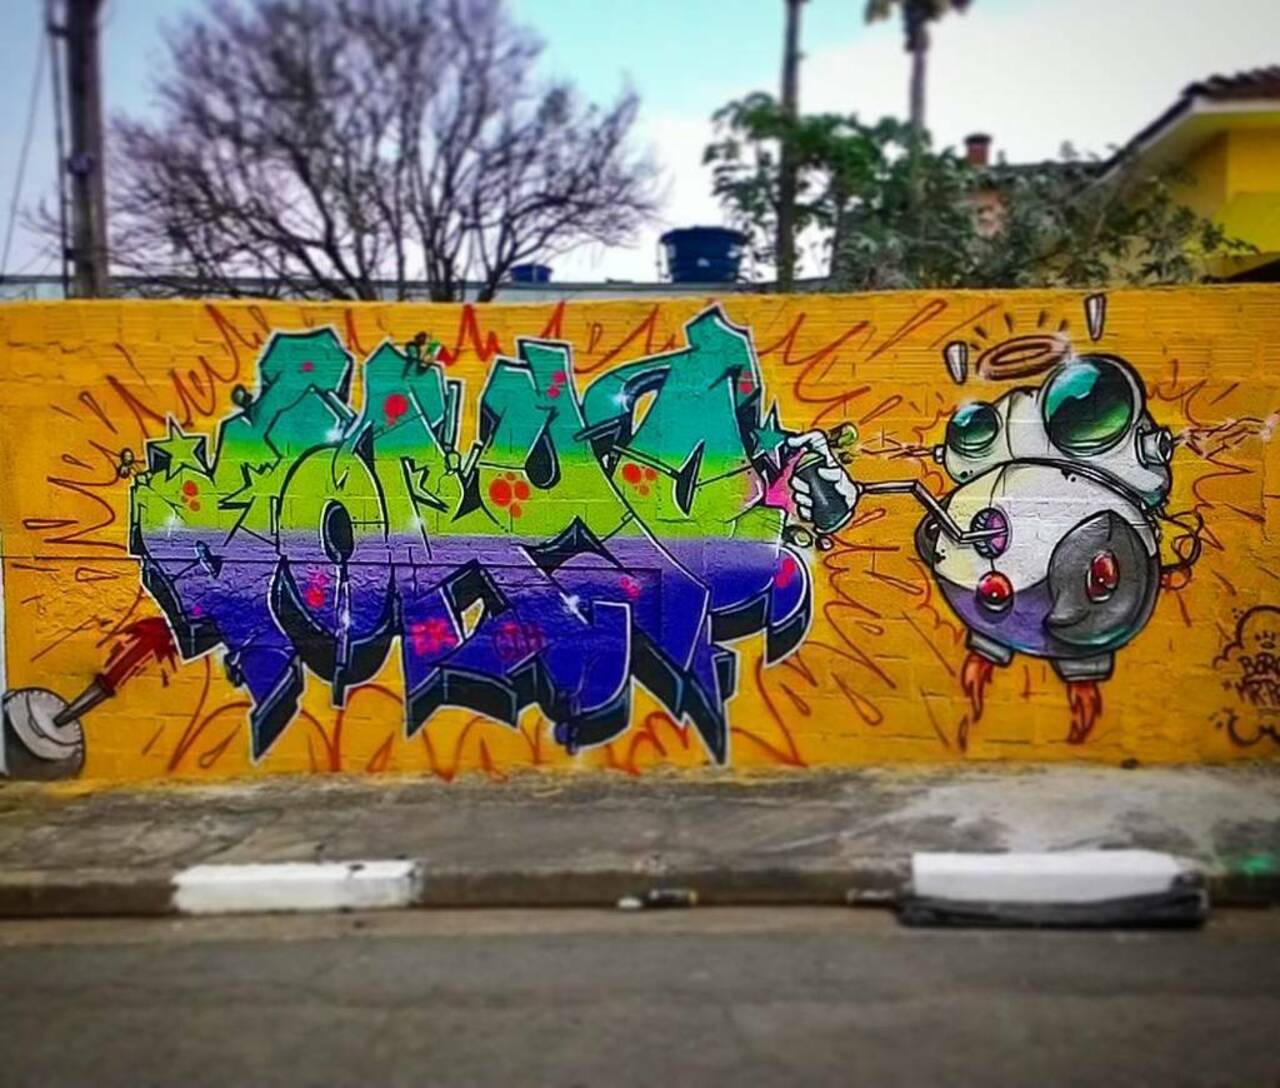 Borgo - Mr.Peu
#graffiti #graff#graffitiporn #graffitiart #streetfiles #streetlife #streetart #streetstyle #urbanwa… http://t.co/9l1OtP87JU